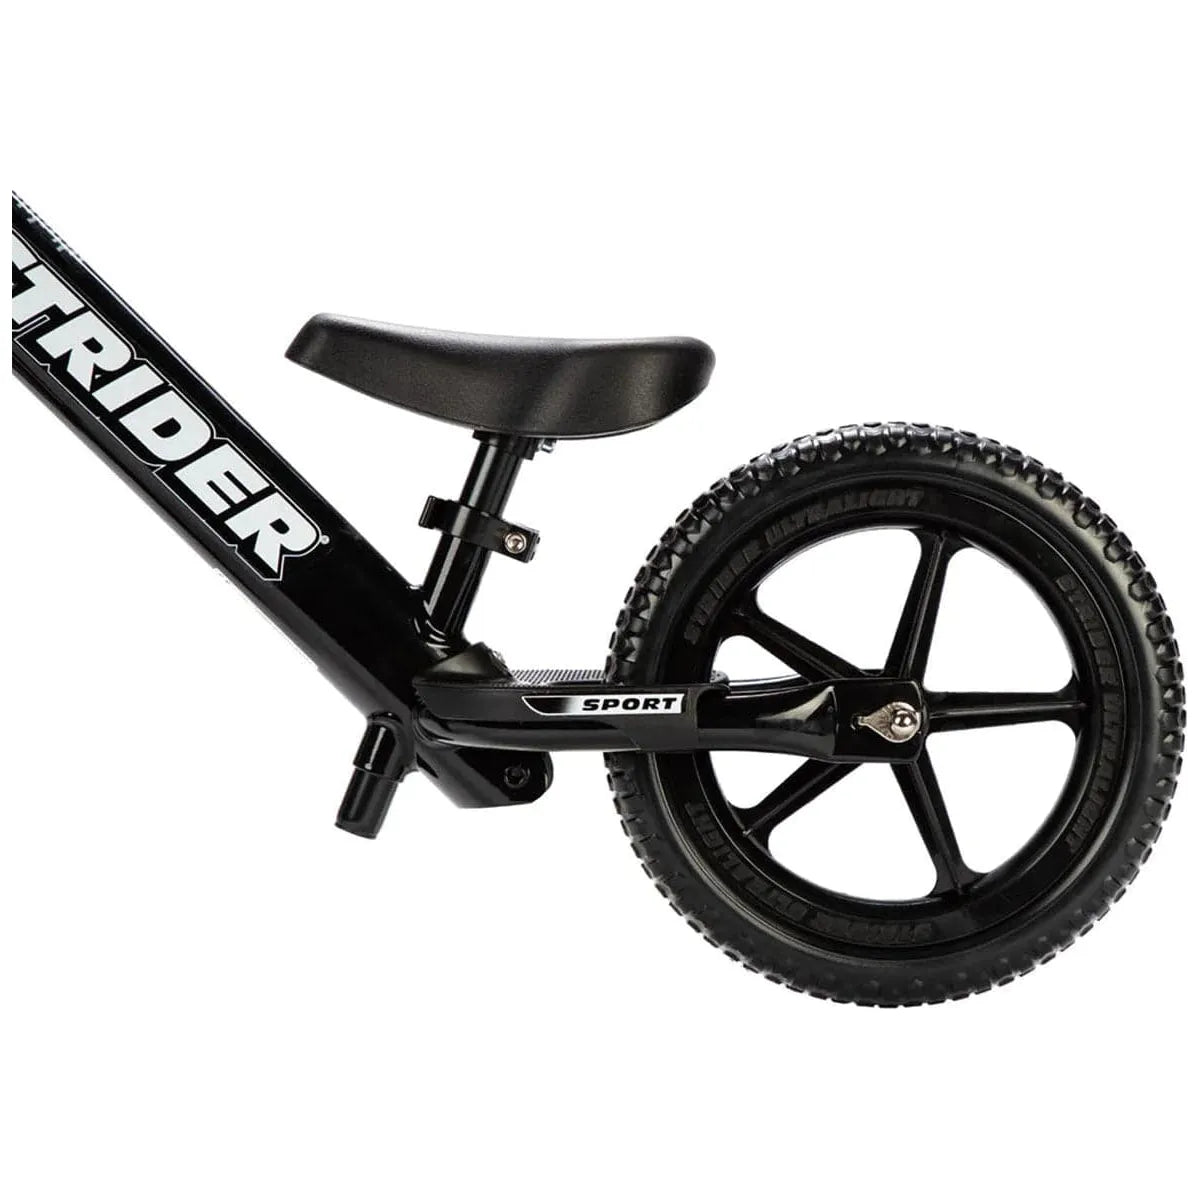 Strider Sport 12 inch Balance Bike - Black rear wheel close up